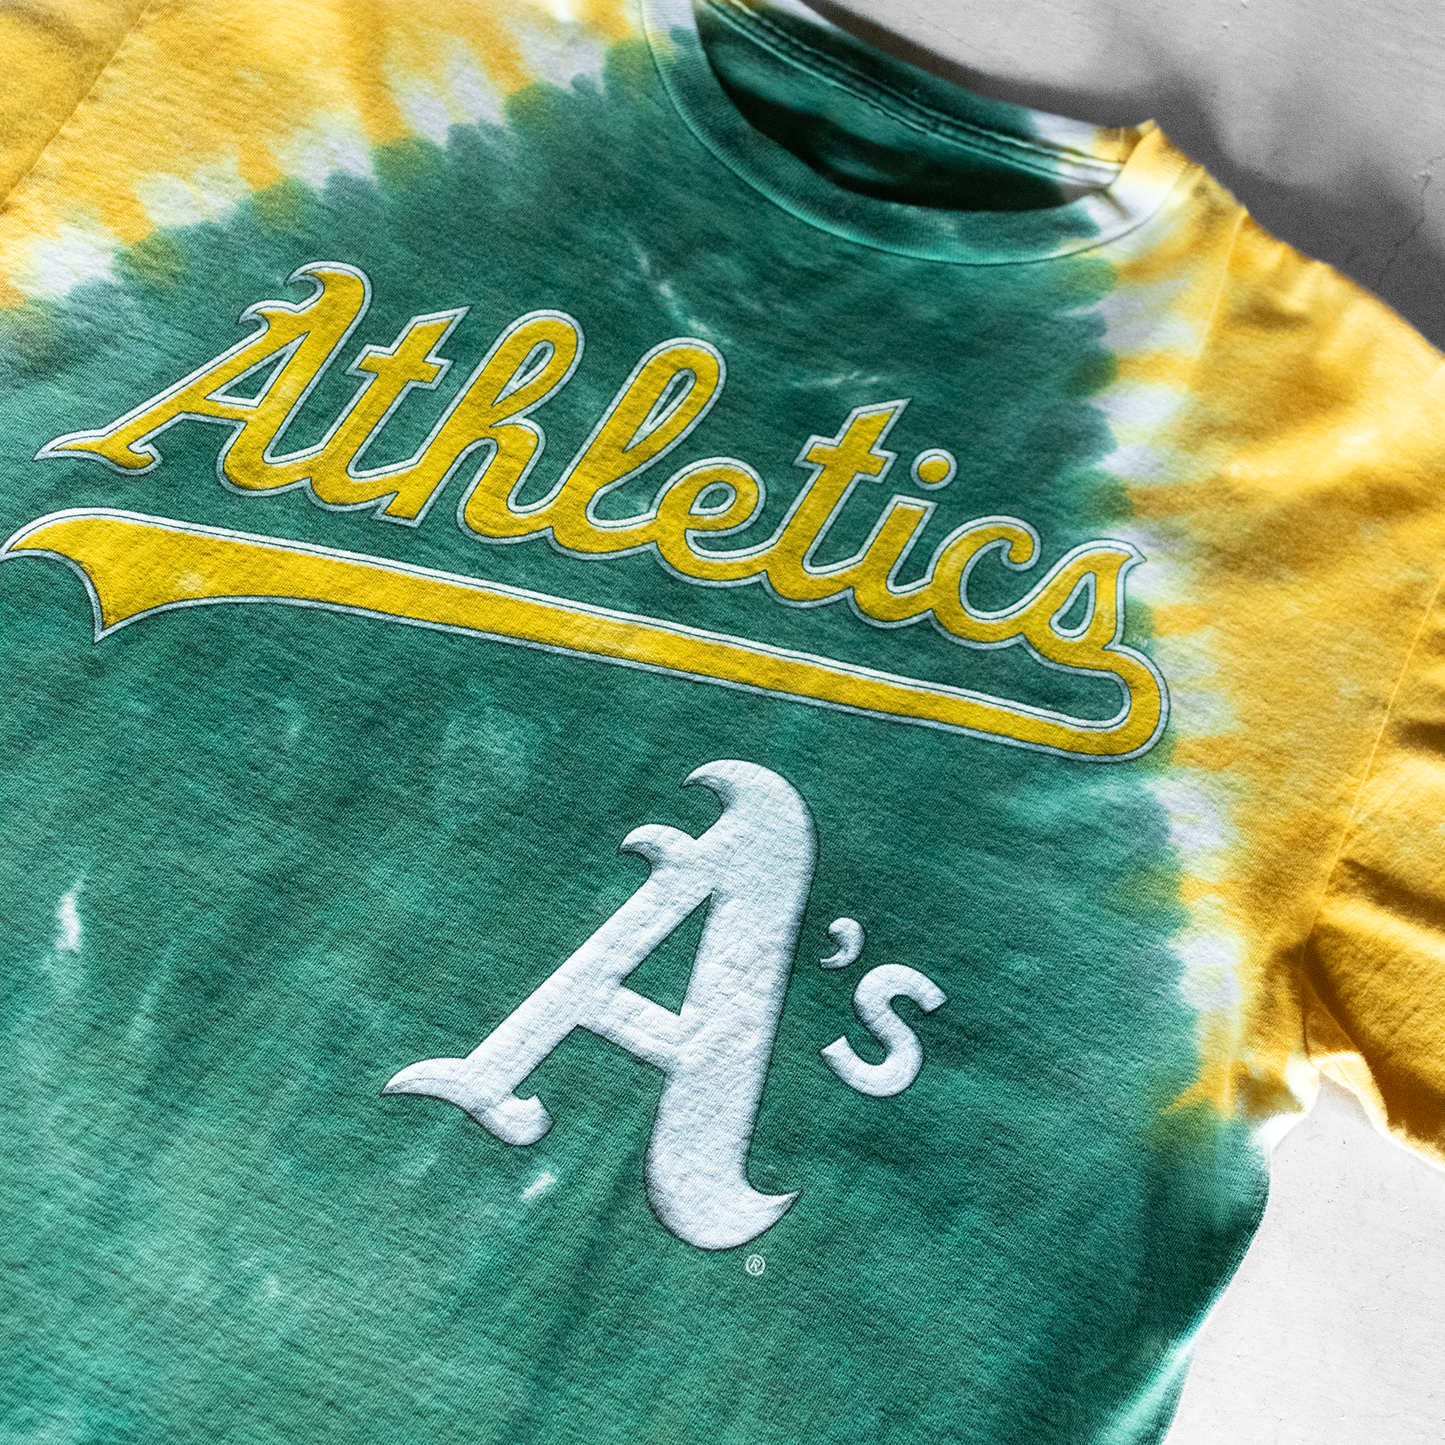 Vintage MLB Oakland Athletics Jersey Logo Tie Dye T-Shirt (L)